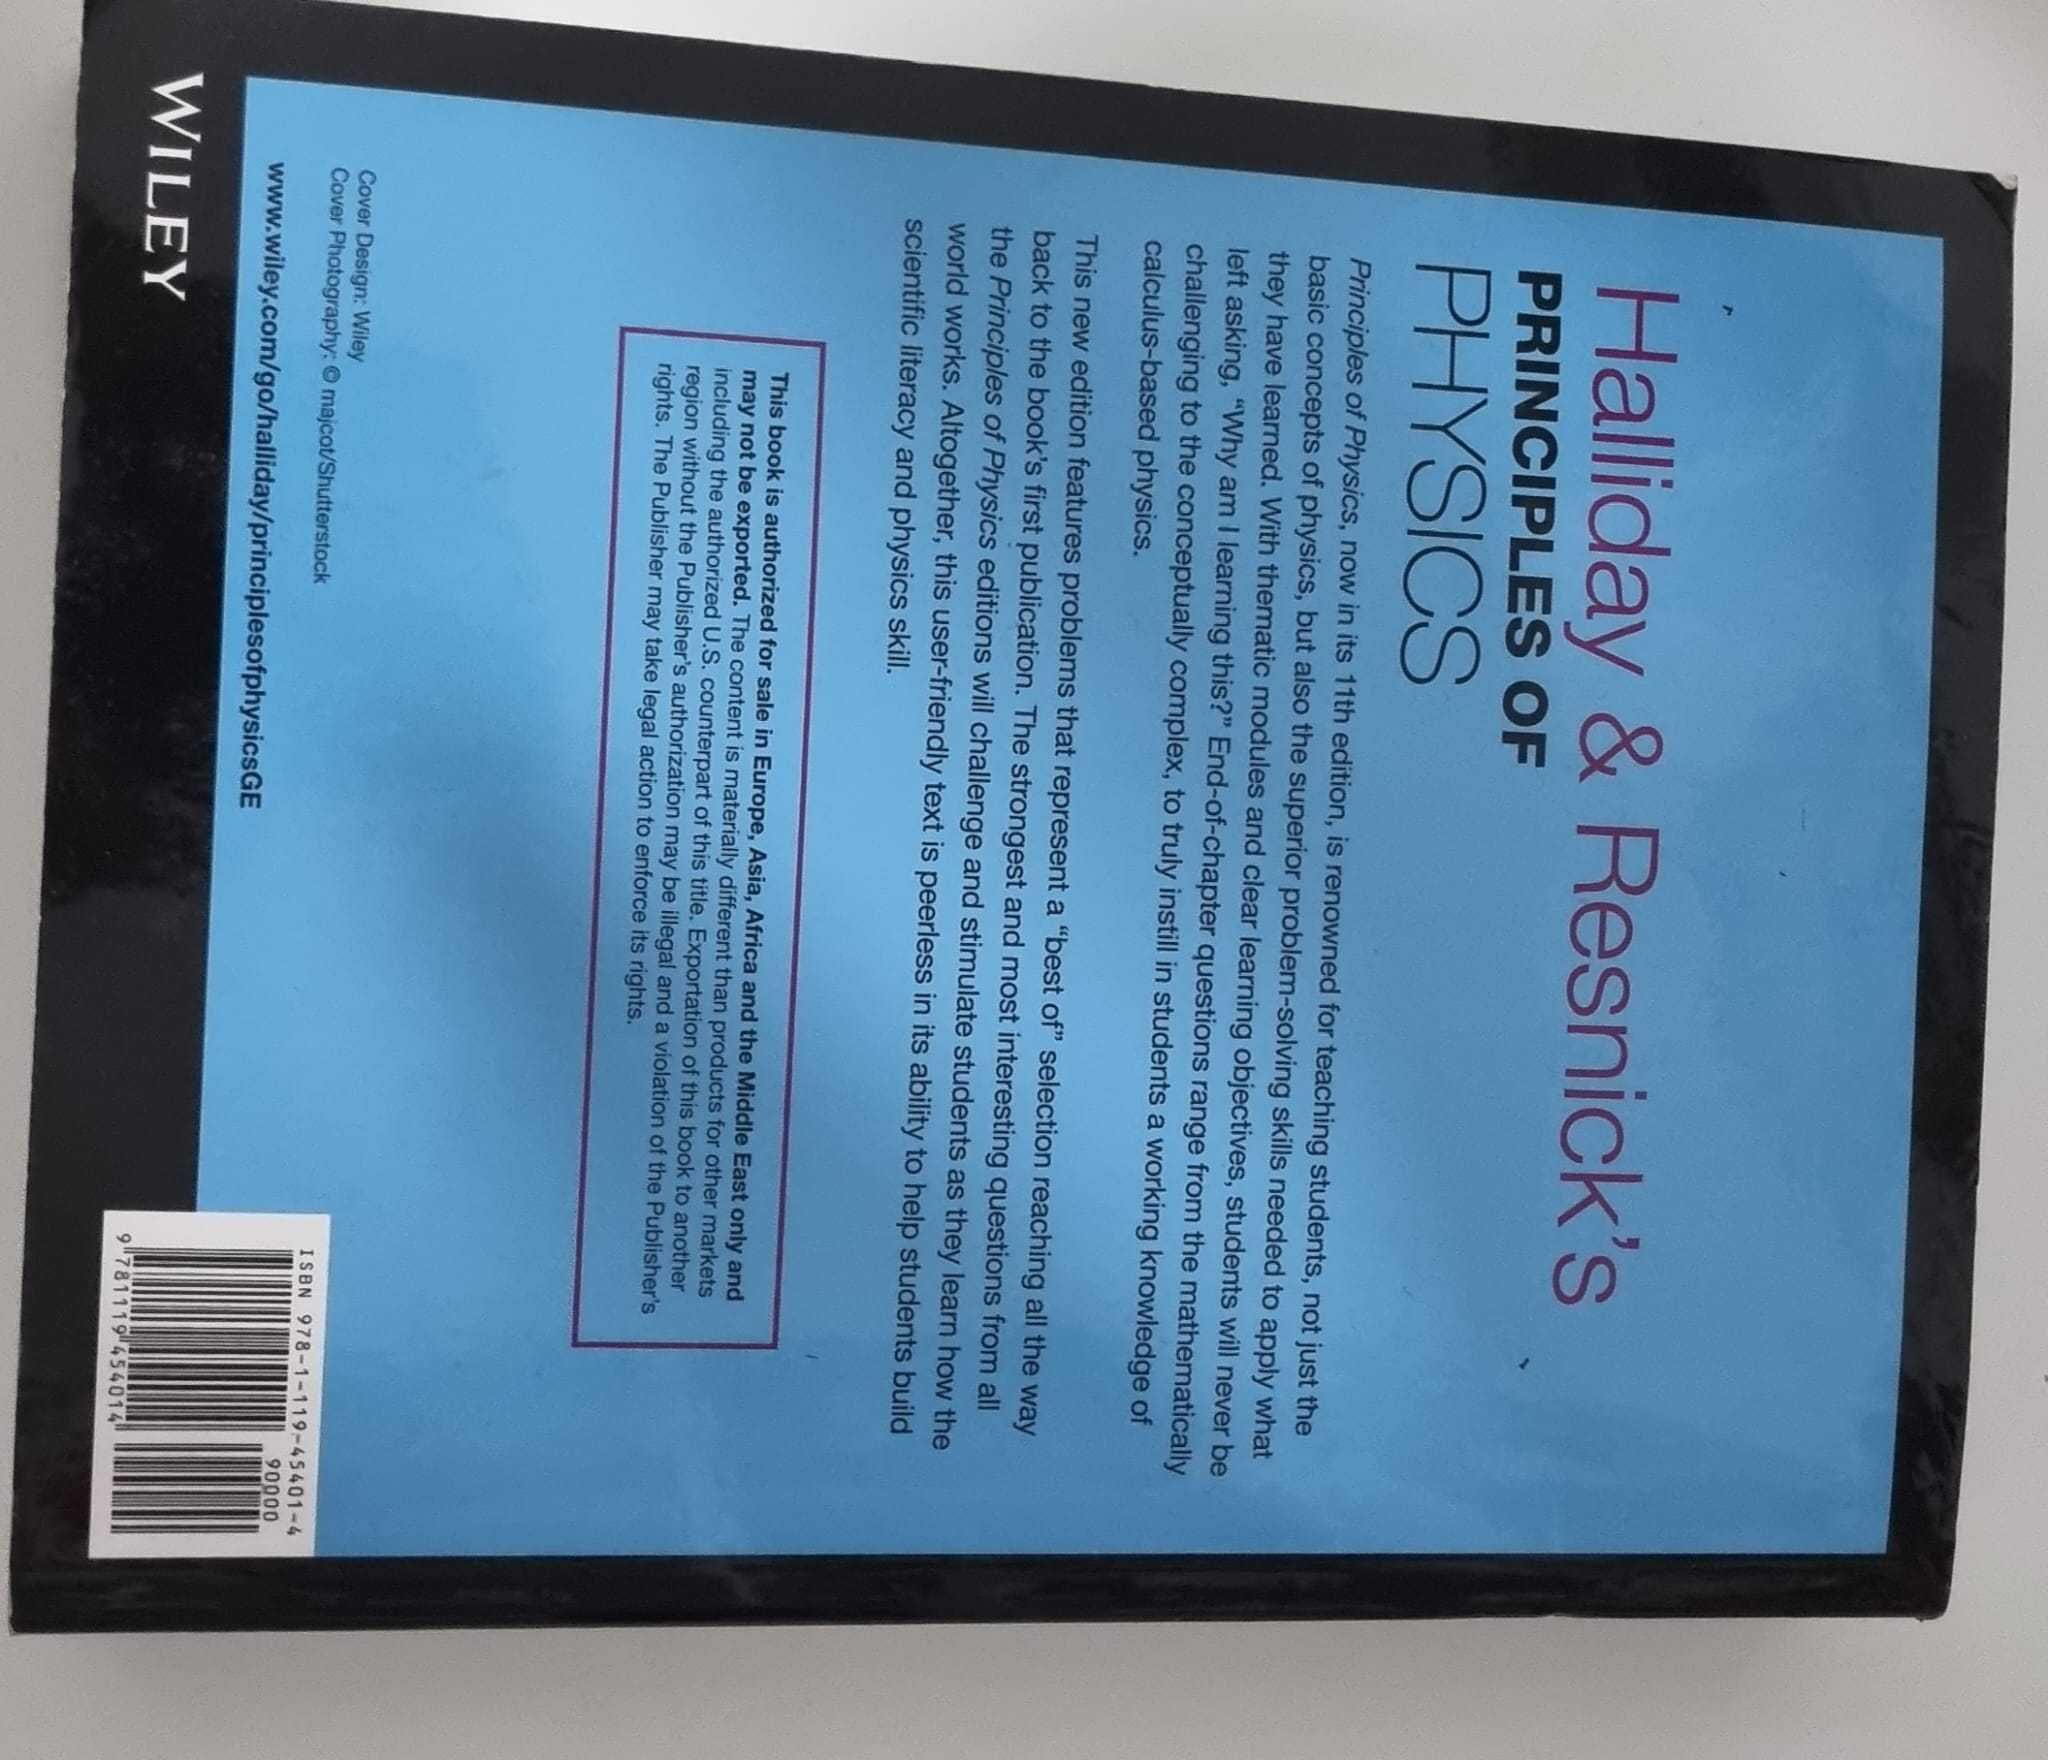 Haliday & Resnick's-Principles of Physics-eleventh edition-nefolosita